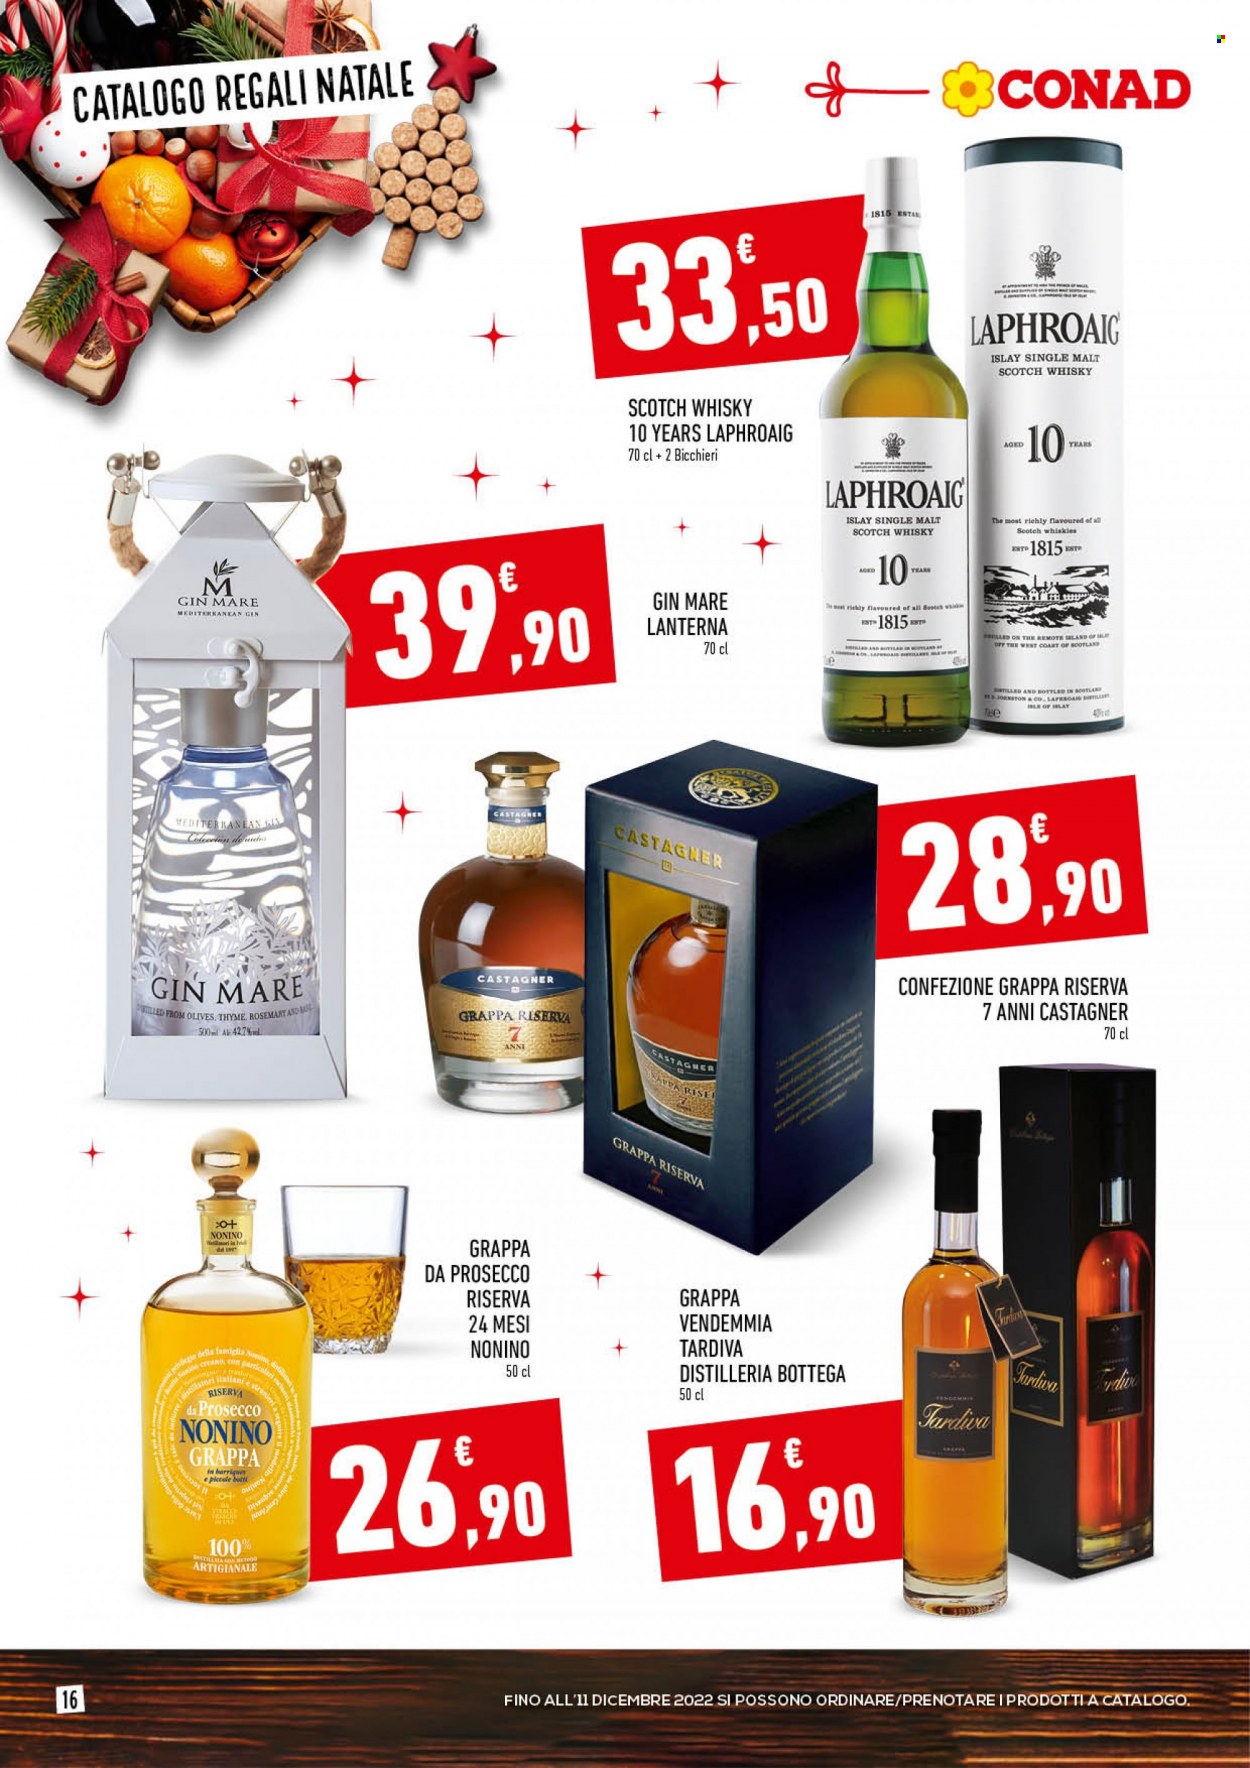 thumbnail - Volantino Conad - 16/11/2022 - 24/12/2022 - Prodotti in offerta - Prosecco, scotch whisky, single malt whisky, whisky, gin, grappa, Laphroaig, Gin Mare, lanterna. Pagina 16.